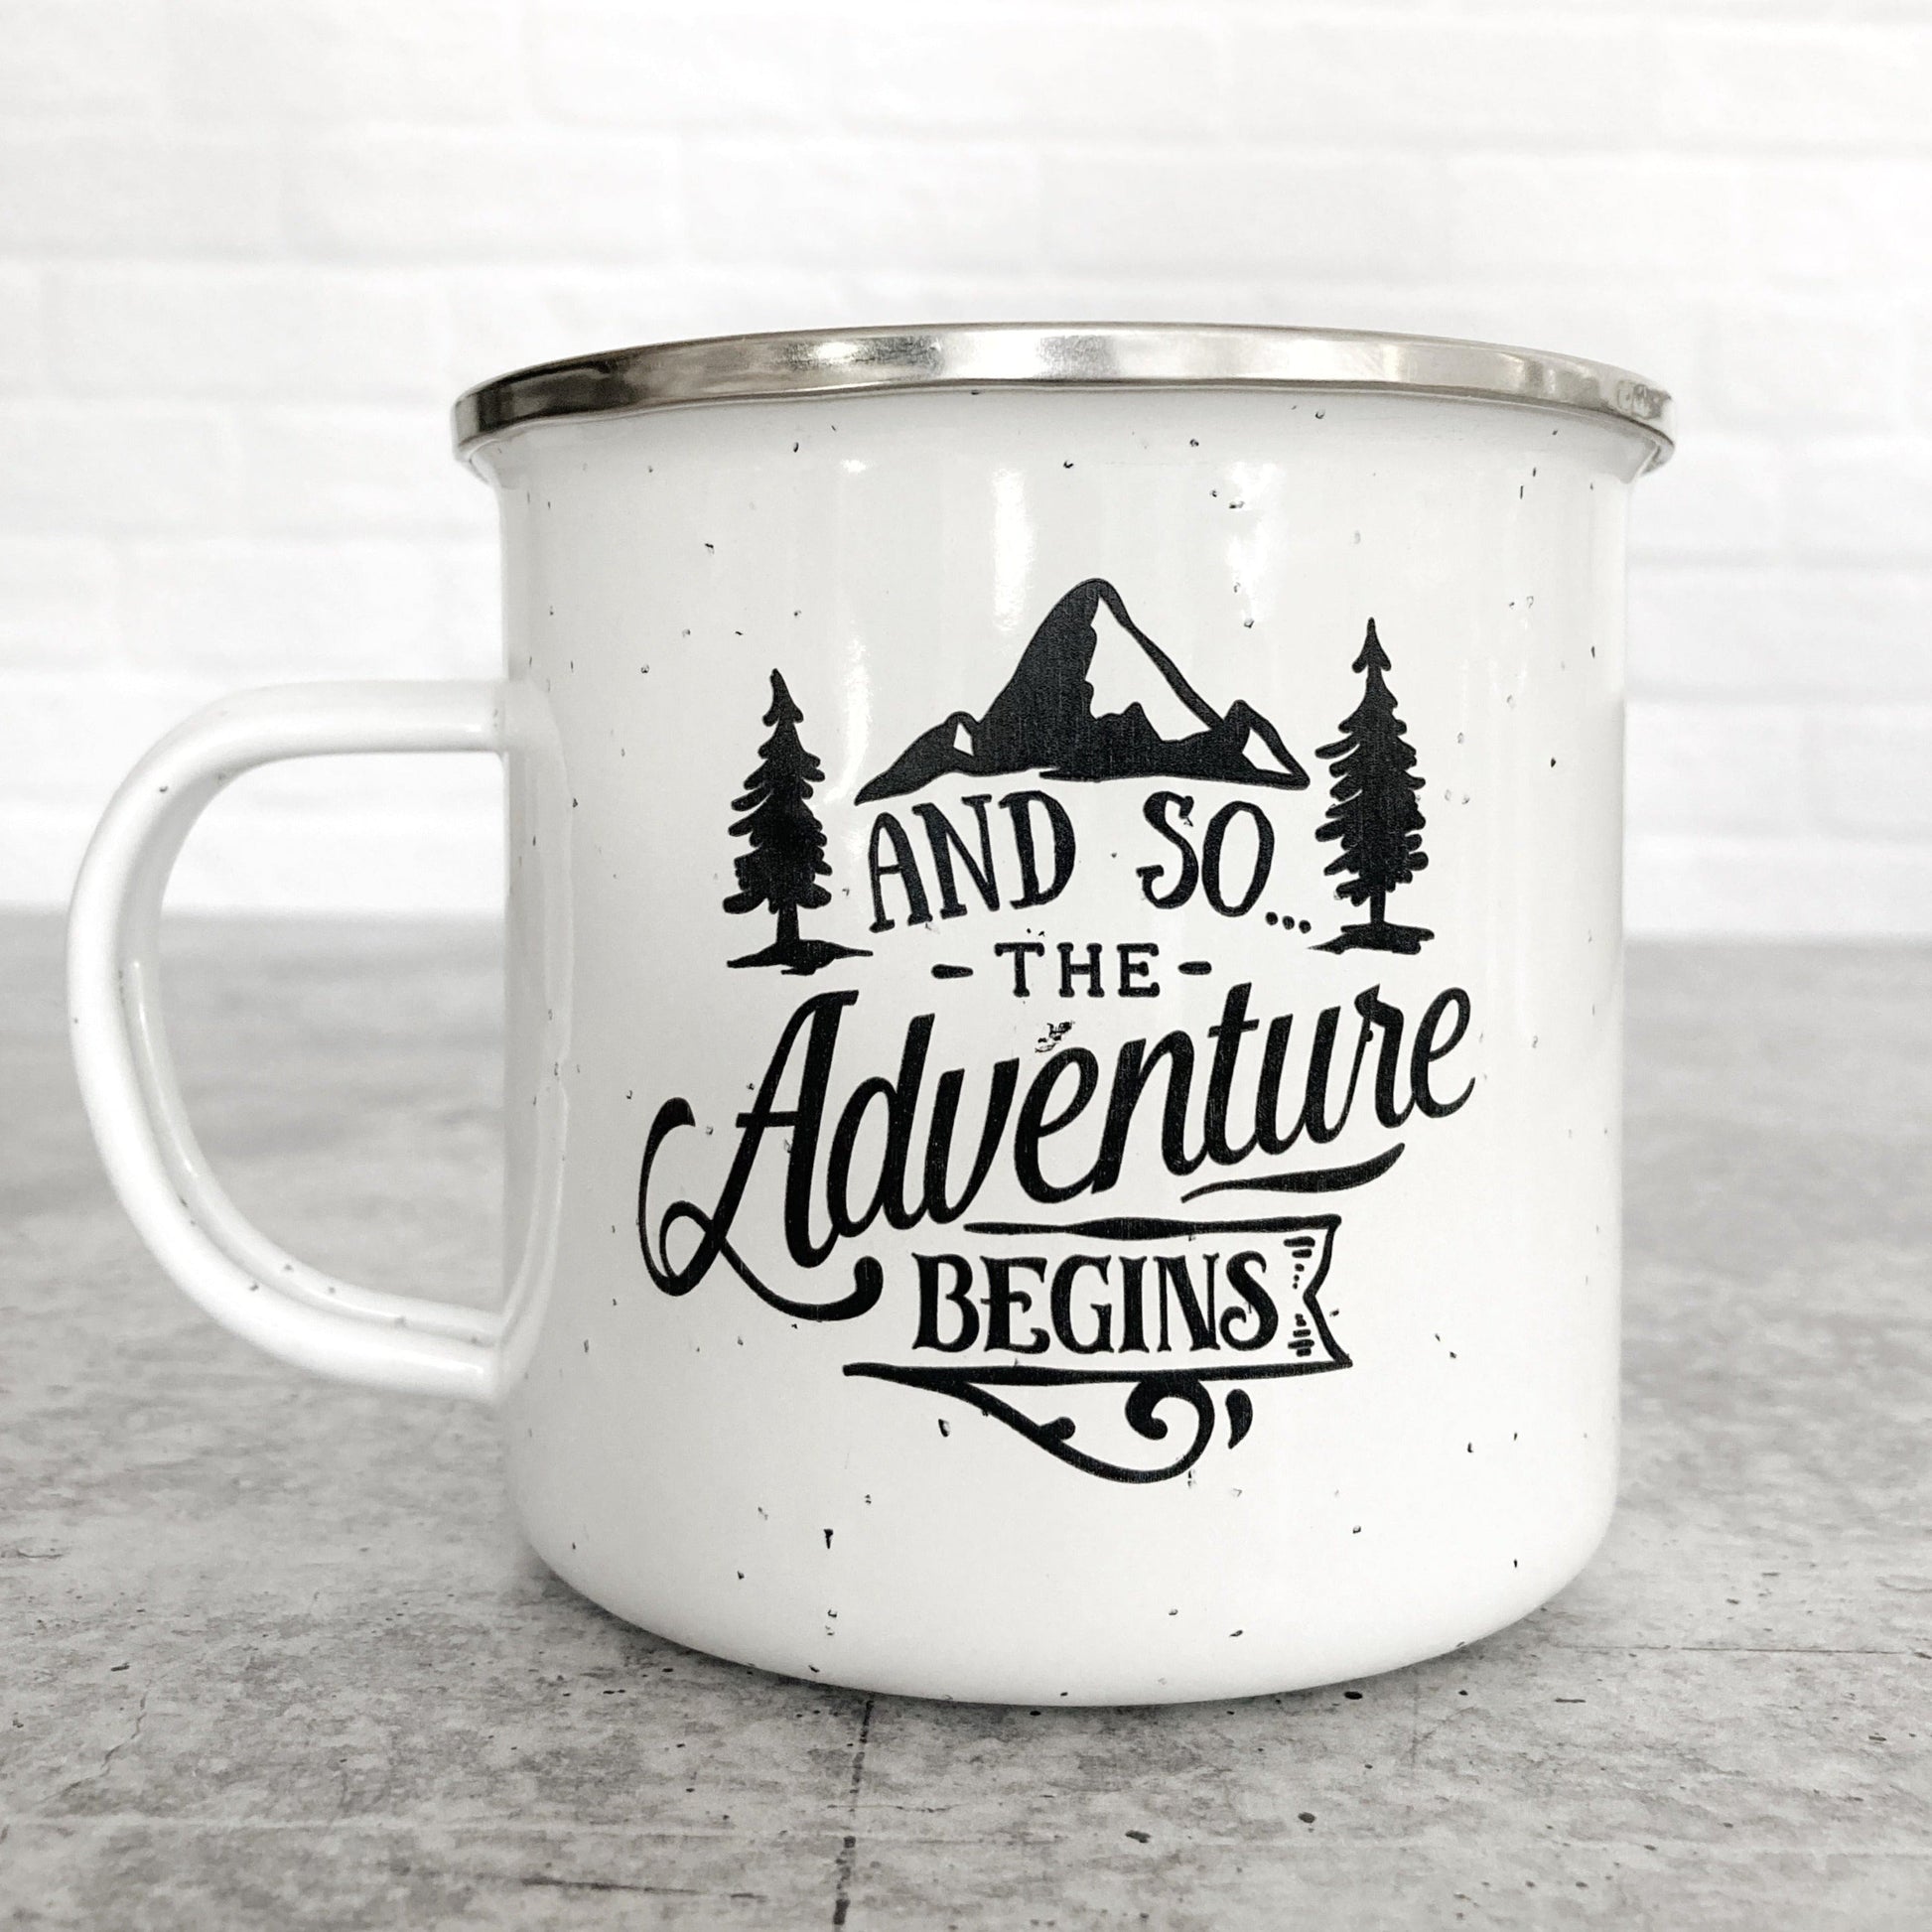 And So...The Adventure Begins design on a white enamel mug